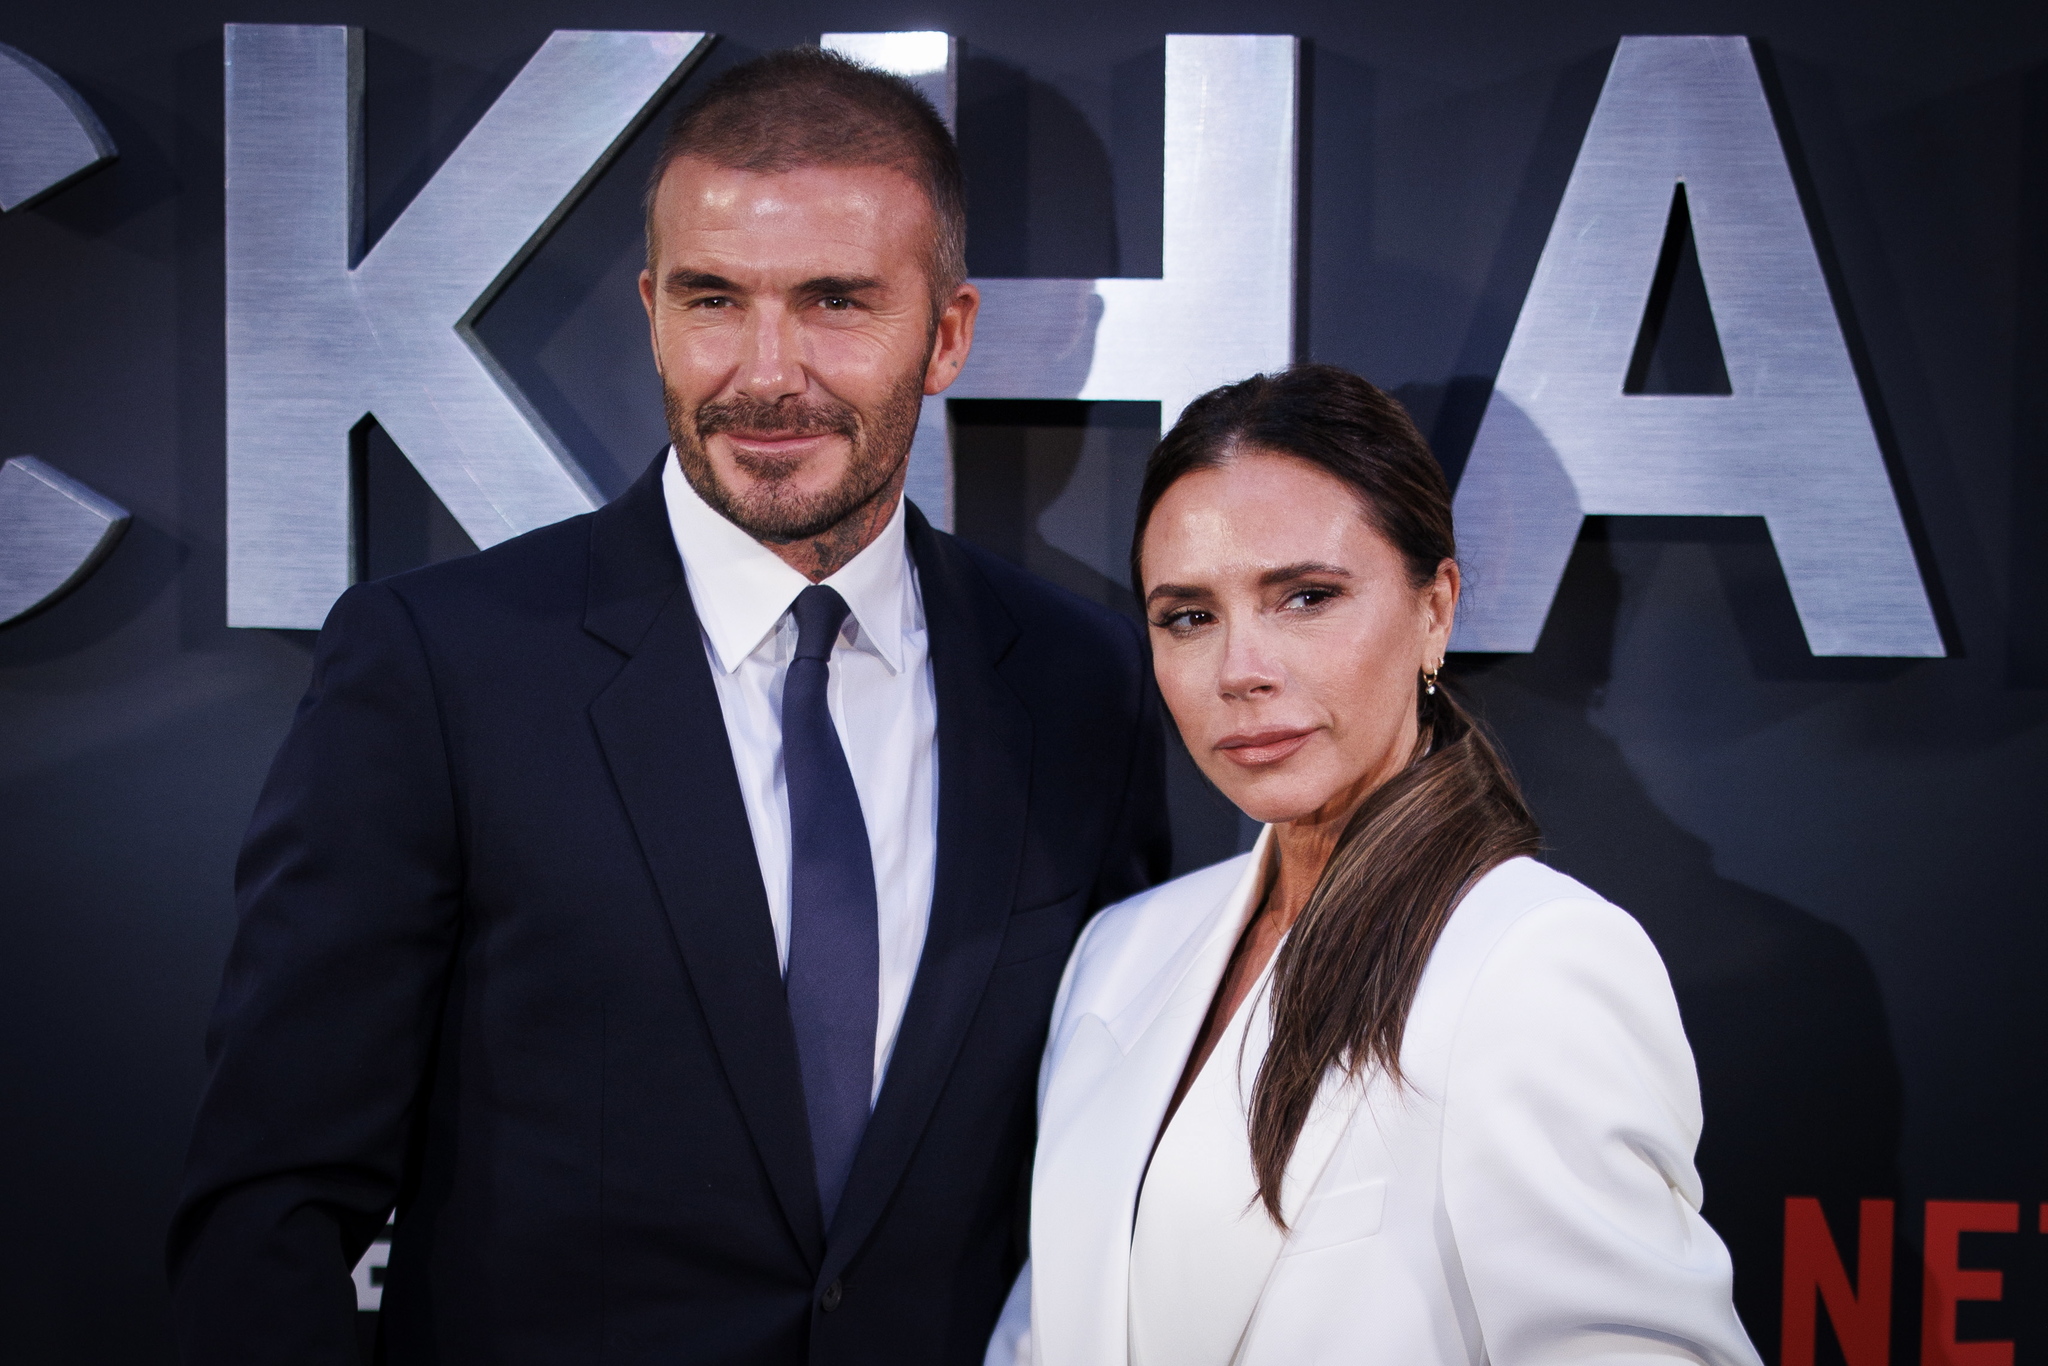 Former soccer player David Beckham and his wife Victoria Beckham